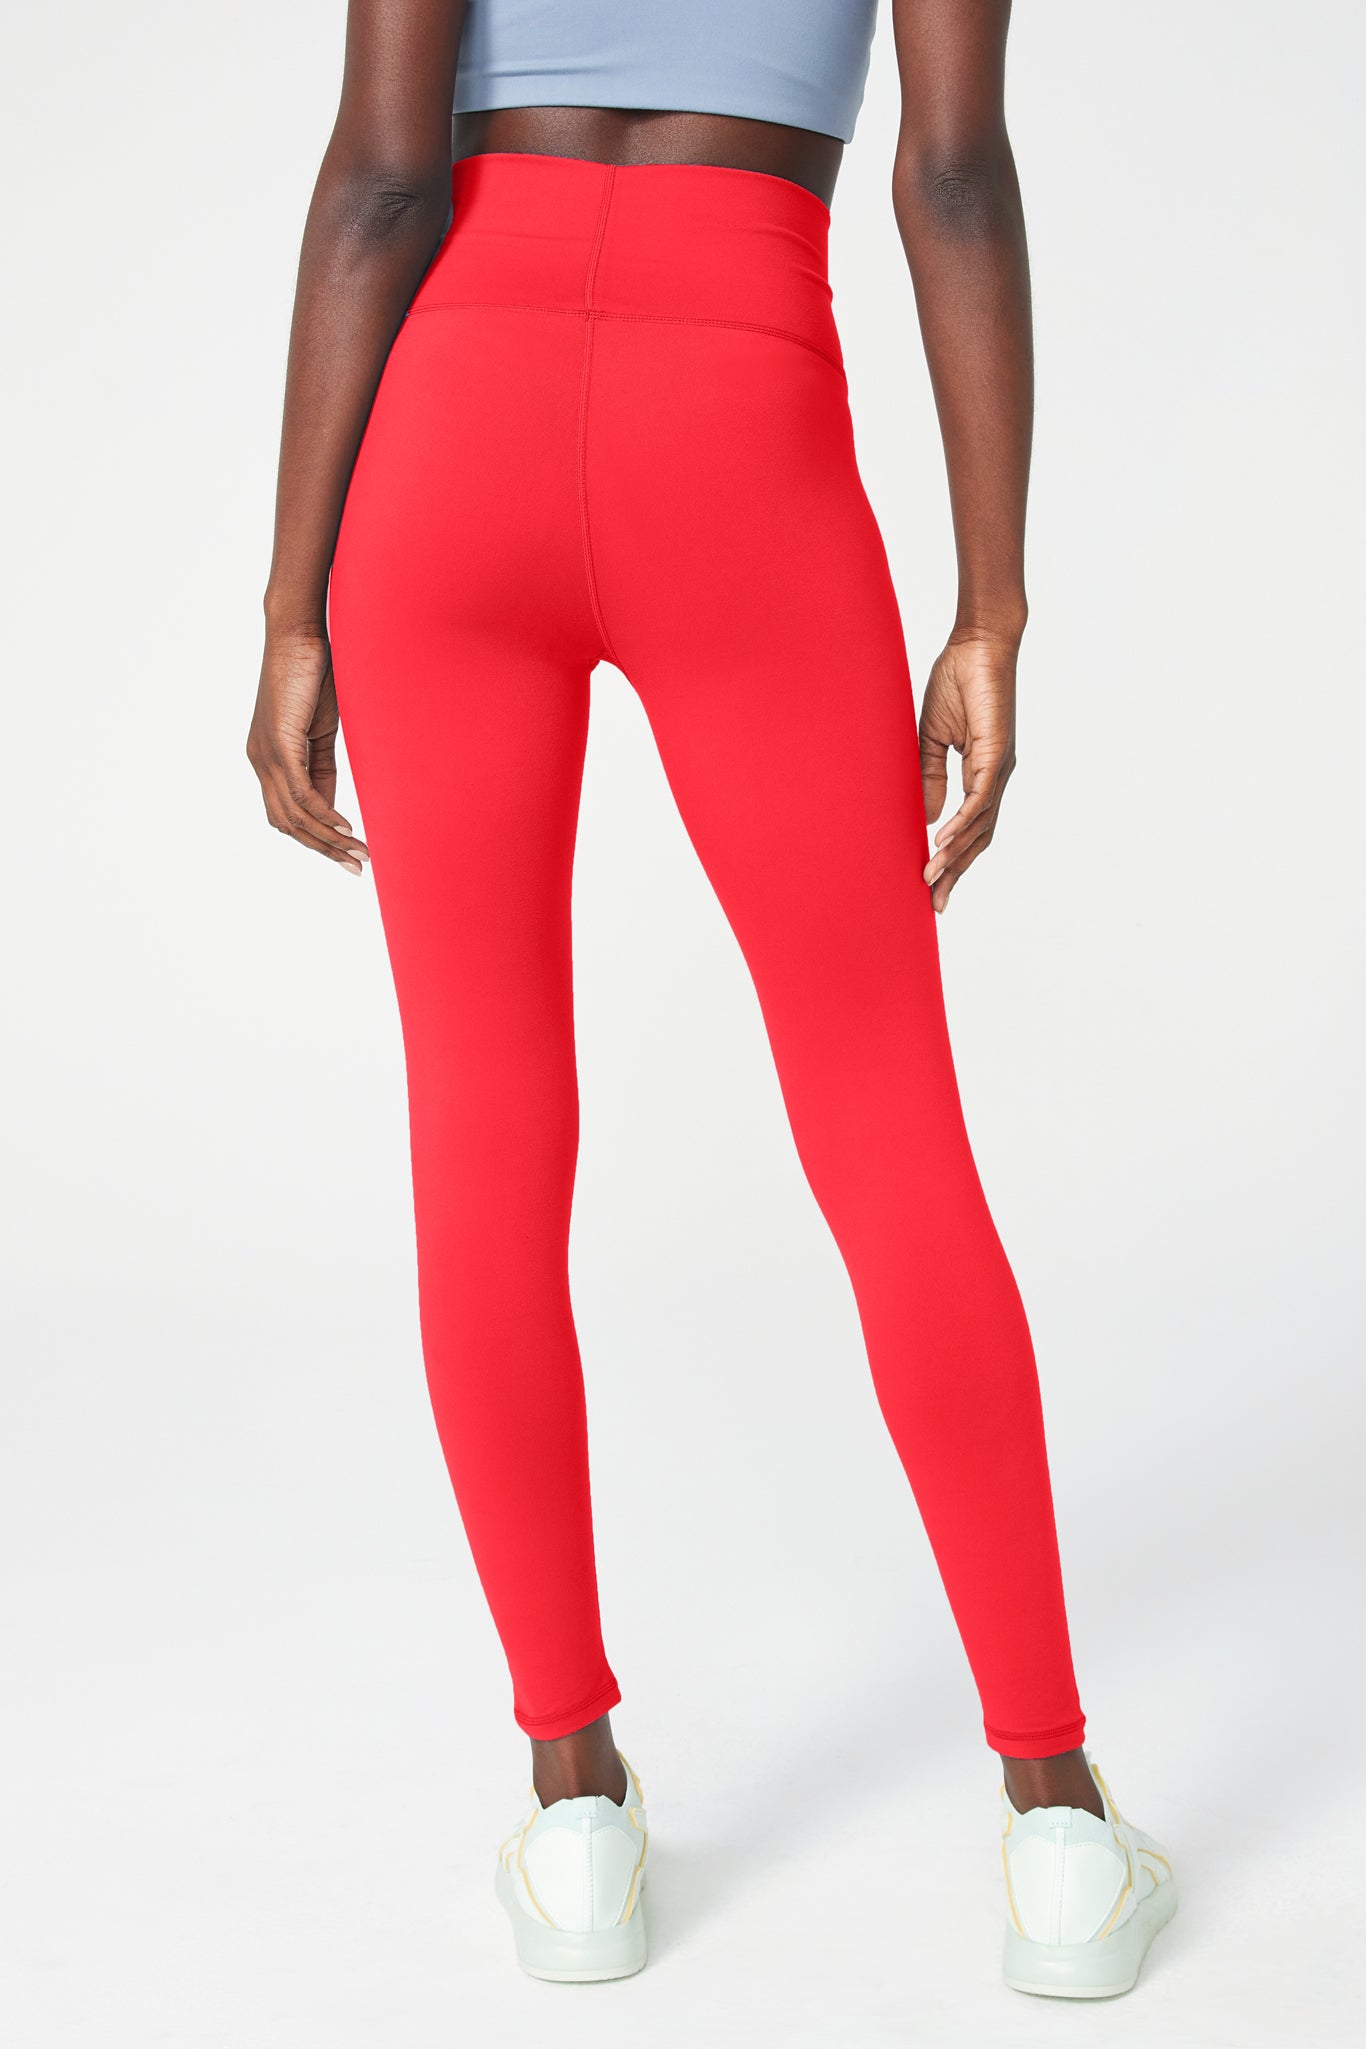 Women's Compression Leggings W/ Pockets - Galaxy Red